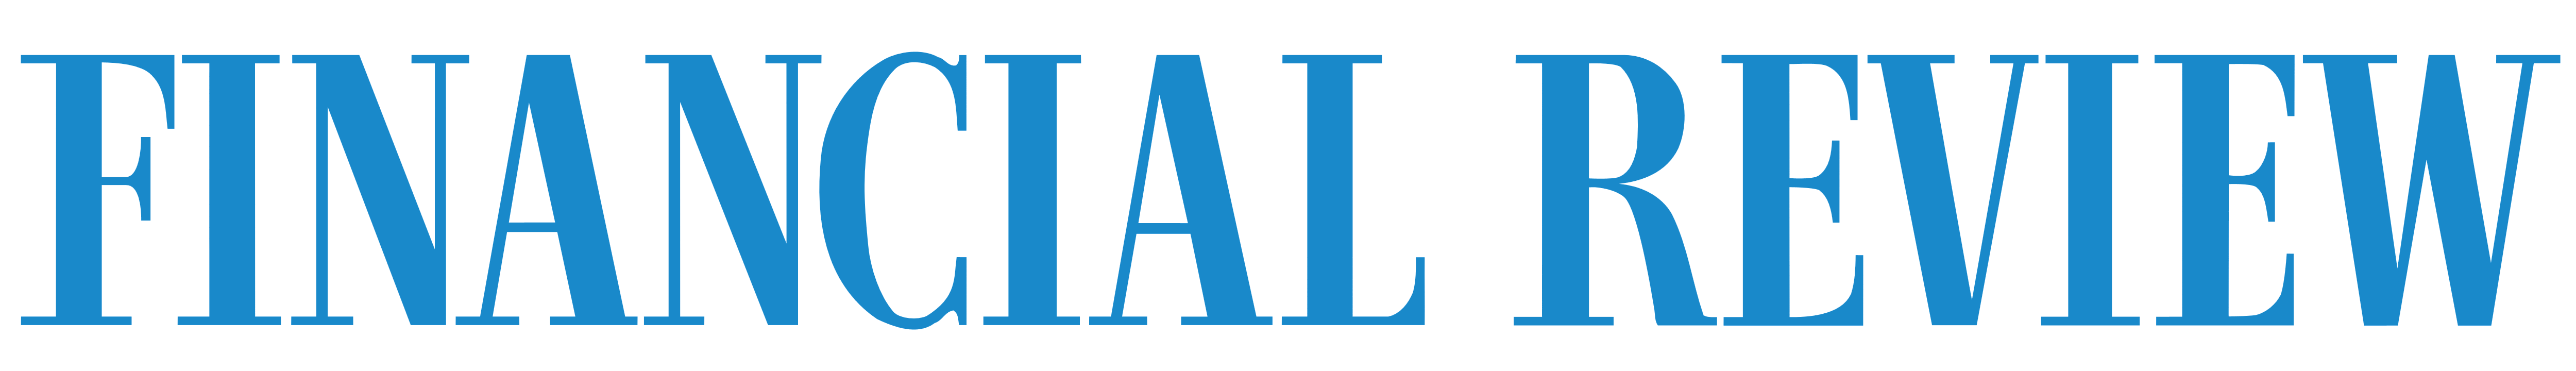 Afr The Australian Financial Review Logo Wordmark